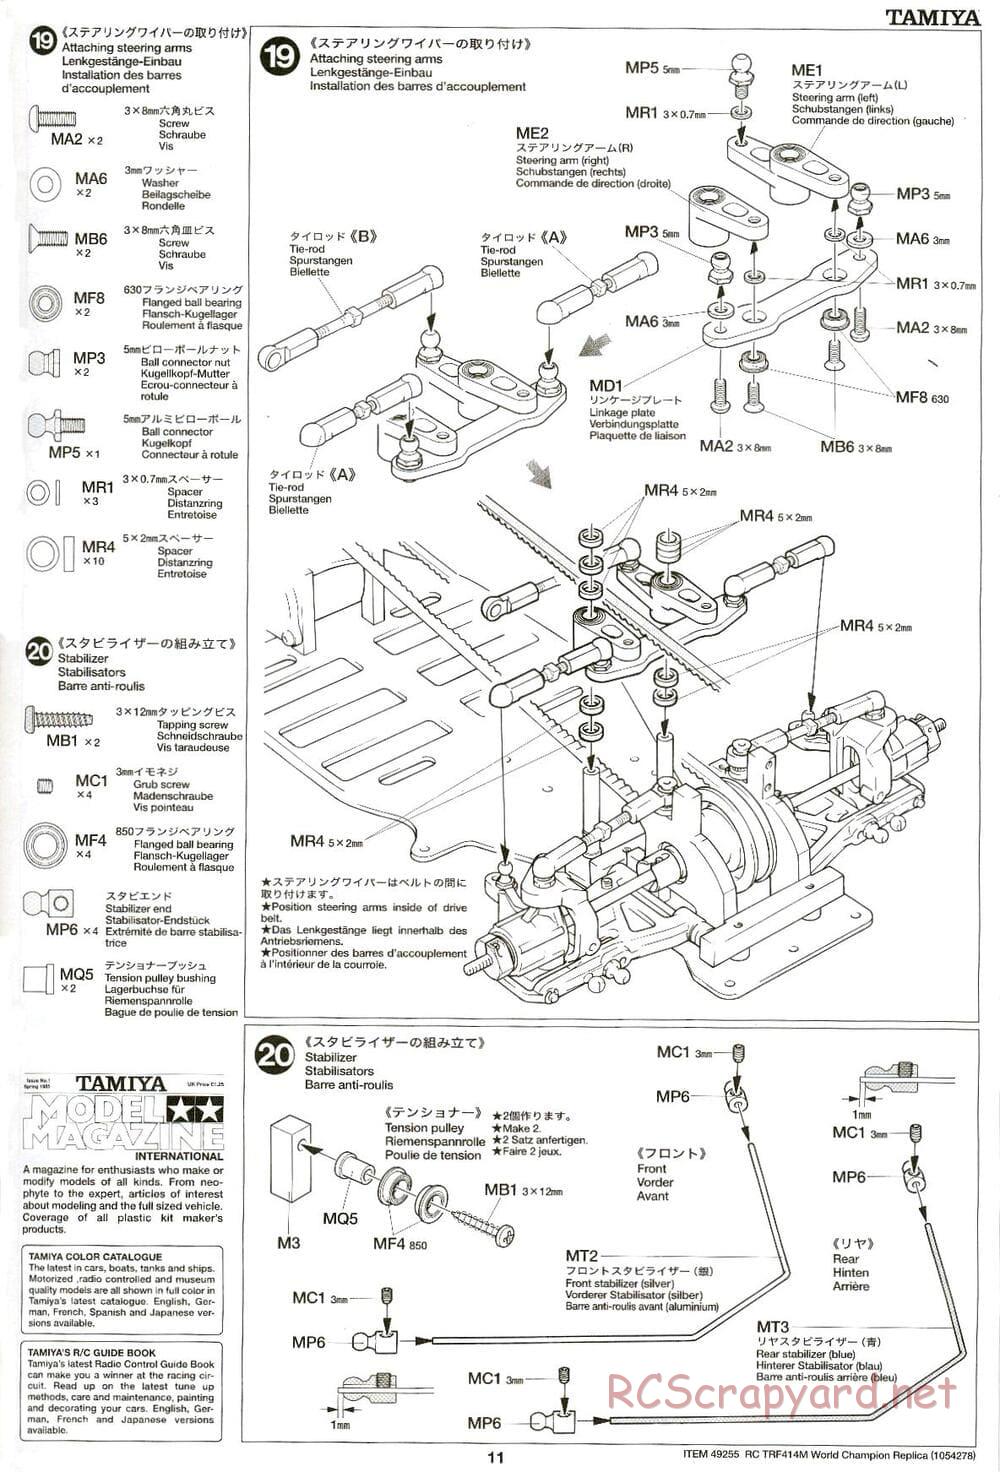 Tamiya - TRF414M World Champion Replica Chassis - Manual - Page 11